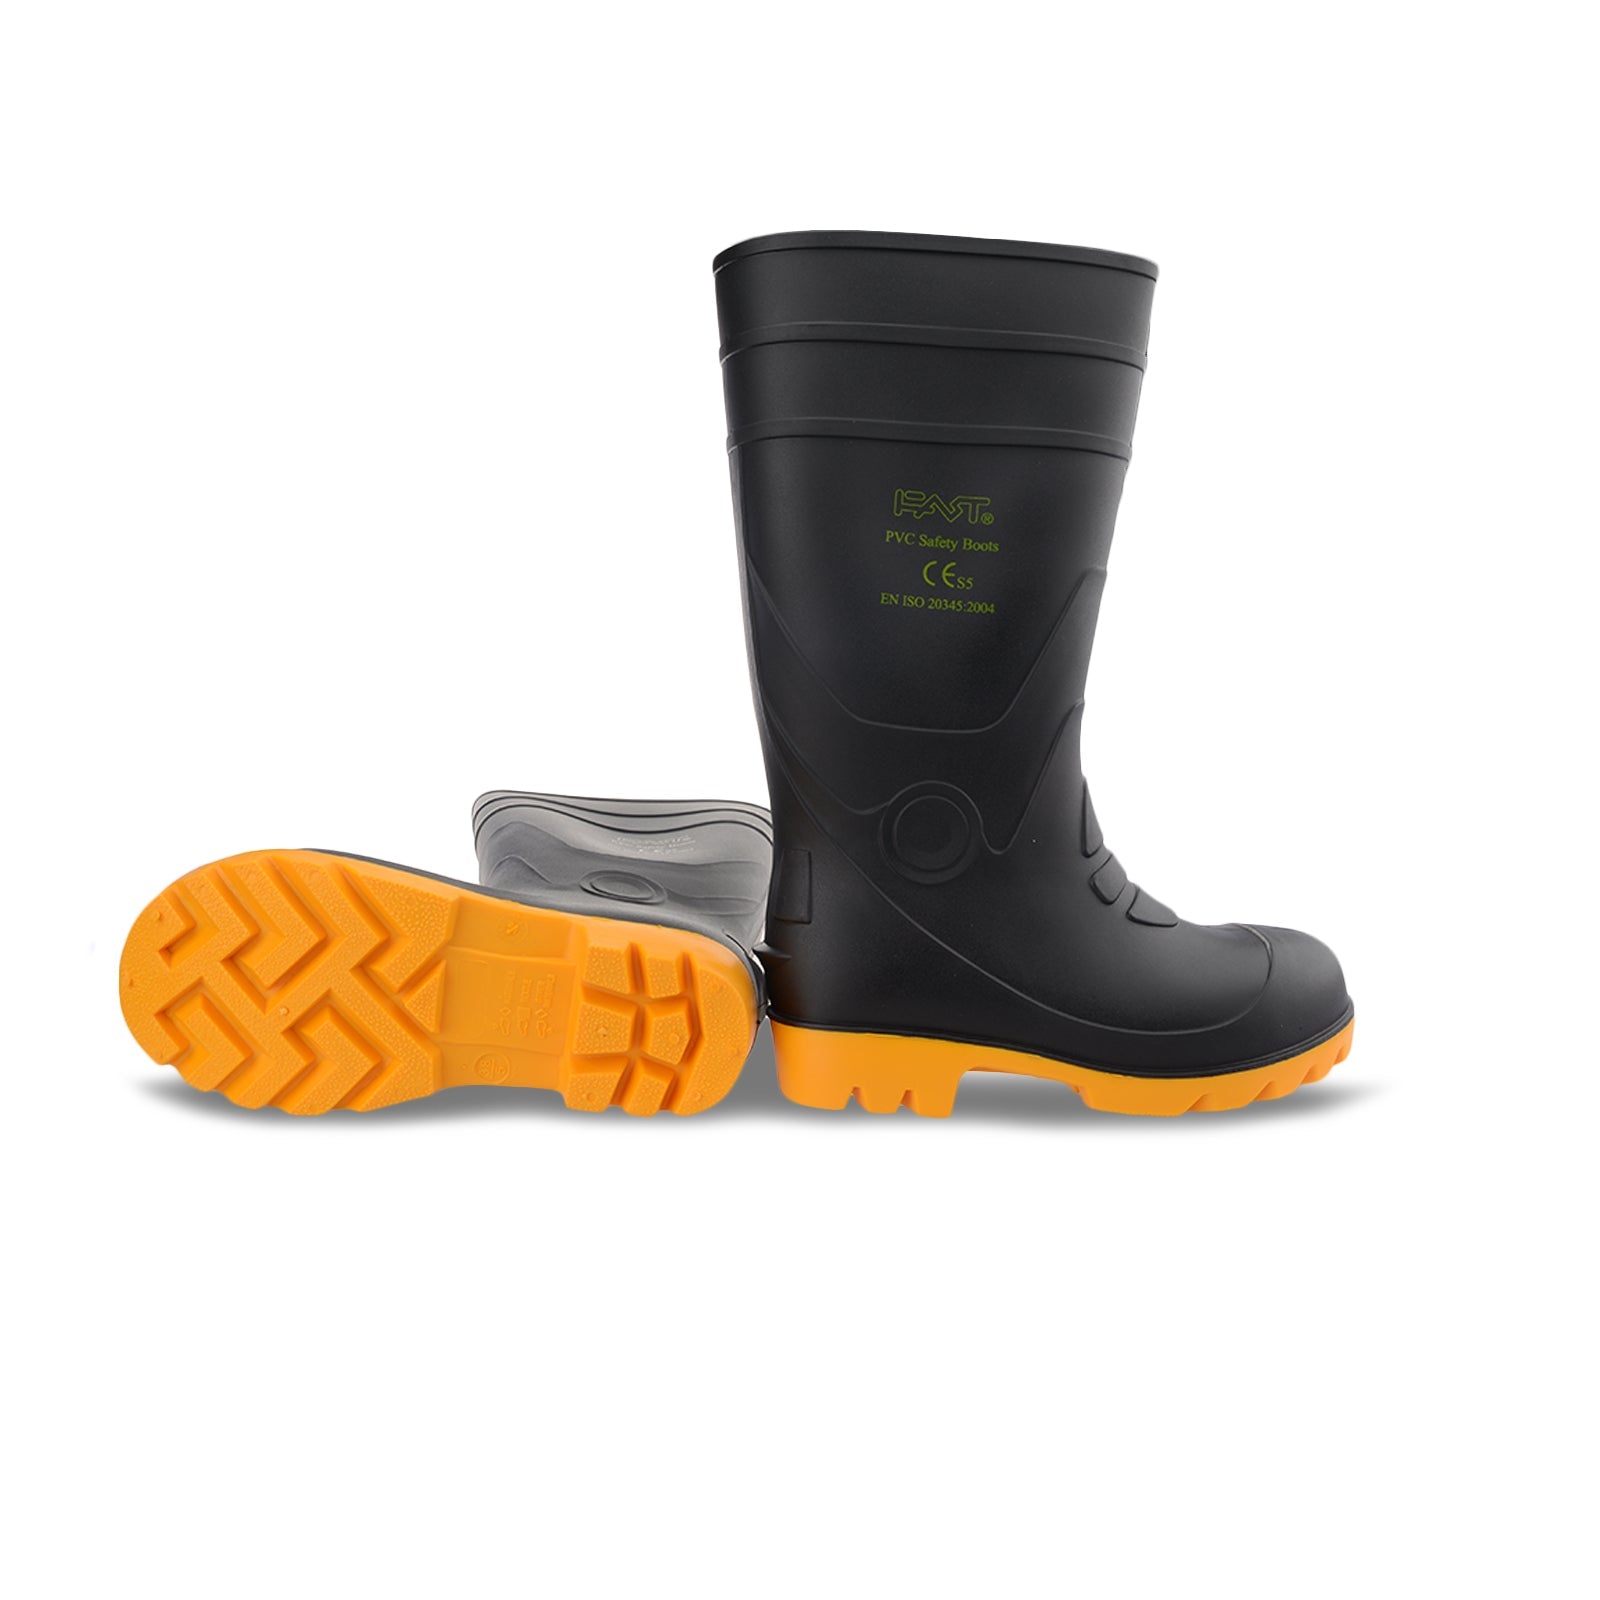 Safety Rain Boots (Steel Toe Cap + Steel Soles)-FAST-BK-EU Size: 37-偉豐鞋 WELL SHOE HK-Well Shoe-偉豐鞋-偉豐網-荃灣鞋店-Functional shoes-Hong Kong Tsuen Wan Shoe Store-Tai Wan Shoe-Japan Shoe-高品質功能鞋-台灣進口鞋-日本進口鞋-High-quality shoes-鞋類配件-荃灣進口鞋-香港鞋店-優質鞋類產品-水靴-帆布鞋-廚師鞋-香港鞋品牌-Hong Kong Shoes brand-長者鞋-Hong Kong Rain Boots-Kitchen shoes-Cruthes-Slipper-Well Shoe Hong Kong-Anello-Arriba-休閒鞋-舒適鞋-健康鞋-皮鞋-Healthy shoes-Leather shoes-Hiking shoes